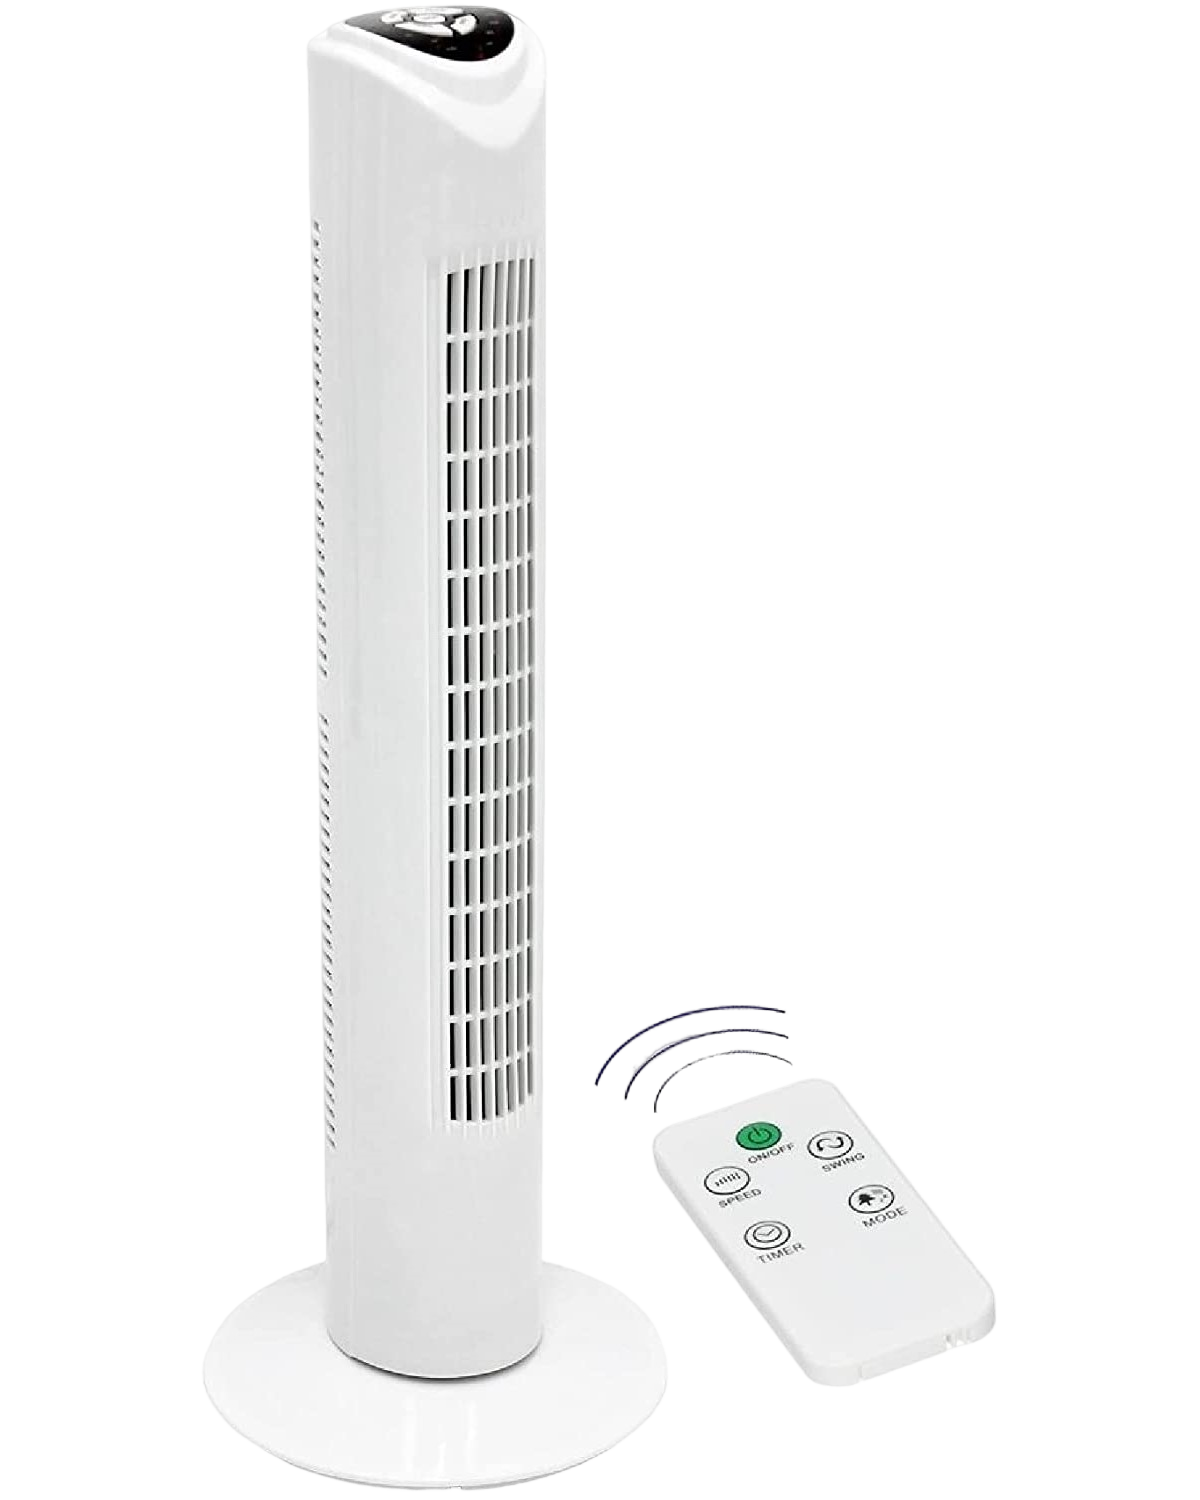 Weiß Fernbedienung (50 Watt) JUNG mit Turmventilator Ventilator TVE19